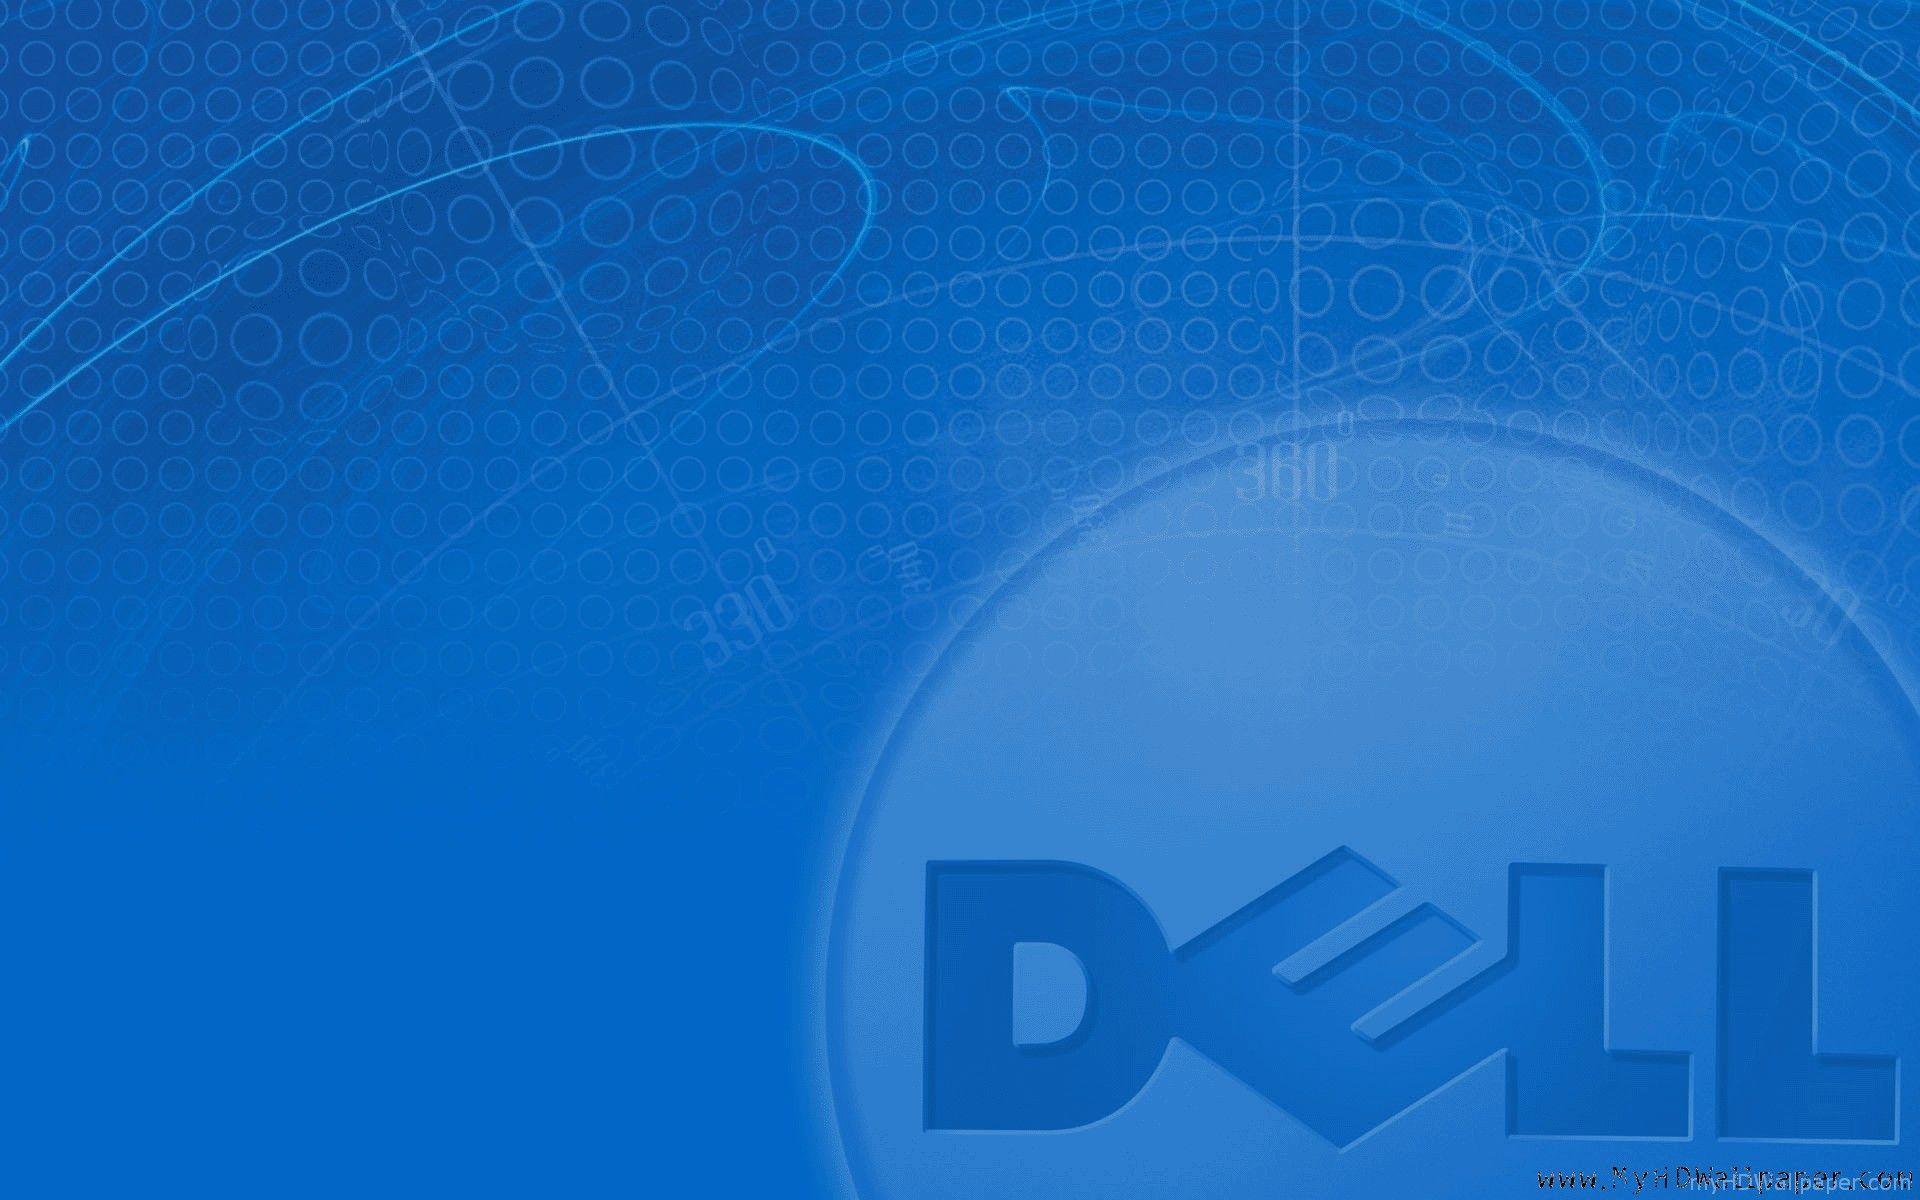 Dell HD wallpaper